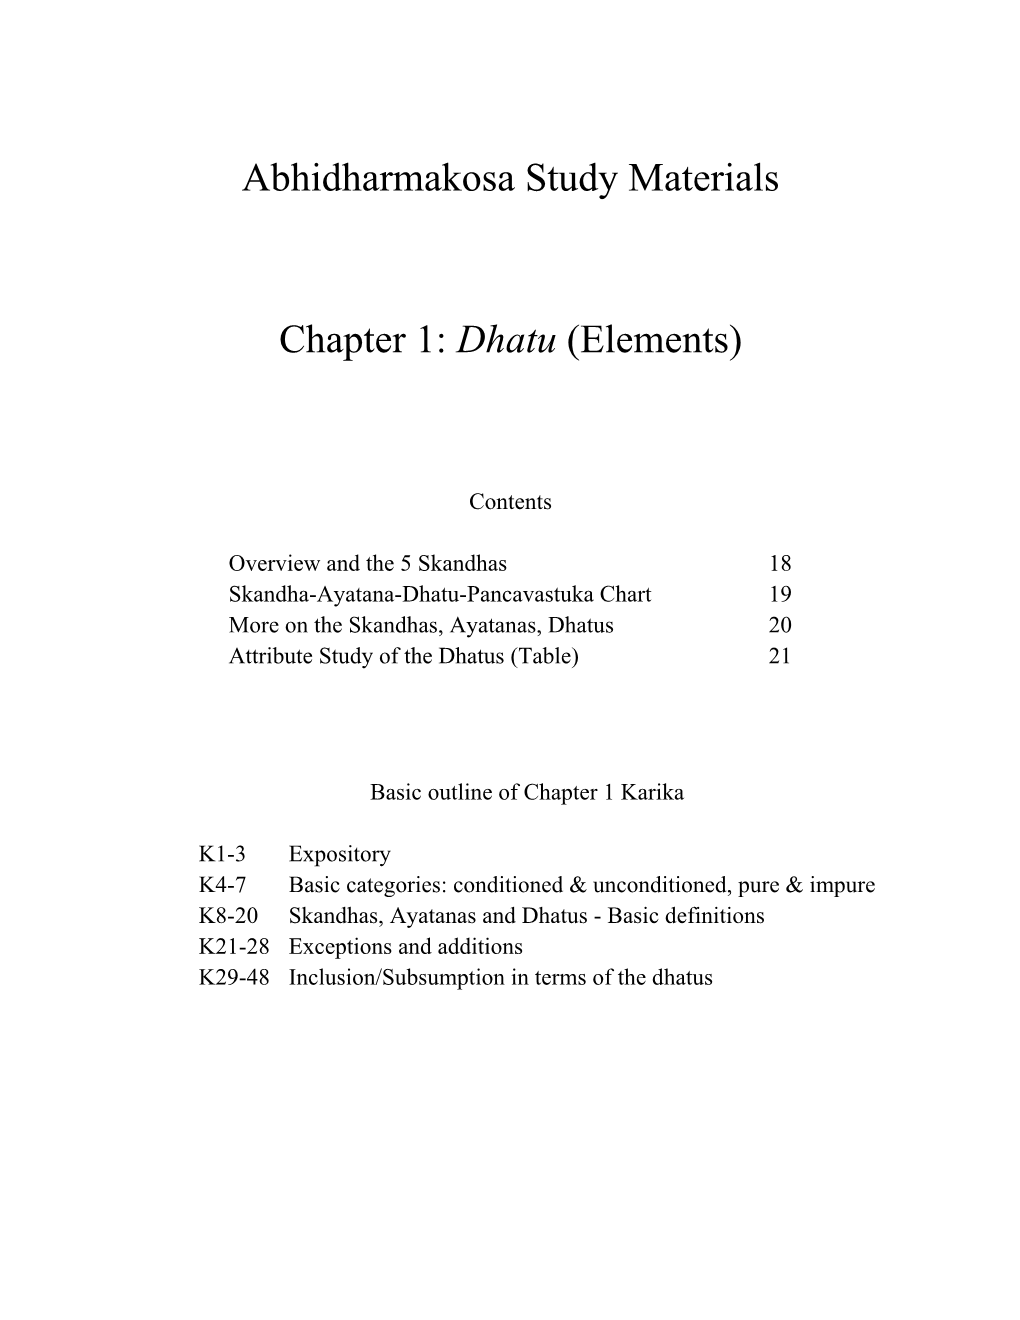 Abhidharmakosa Study Materials Chapter 1: Dhatu (Elements)